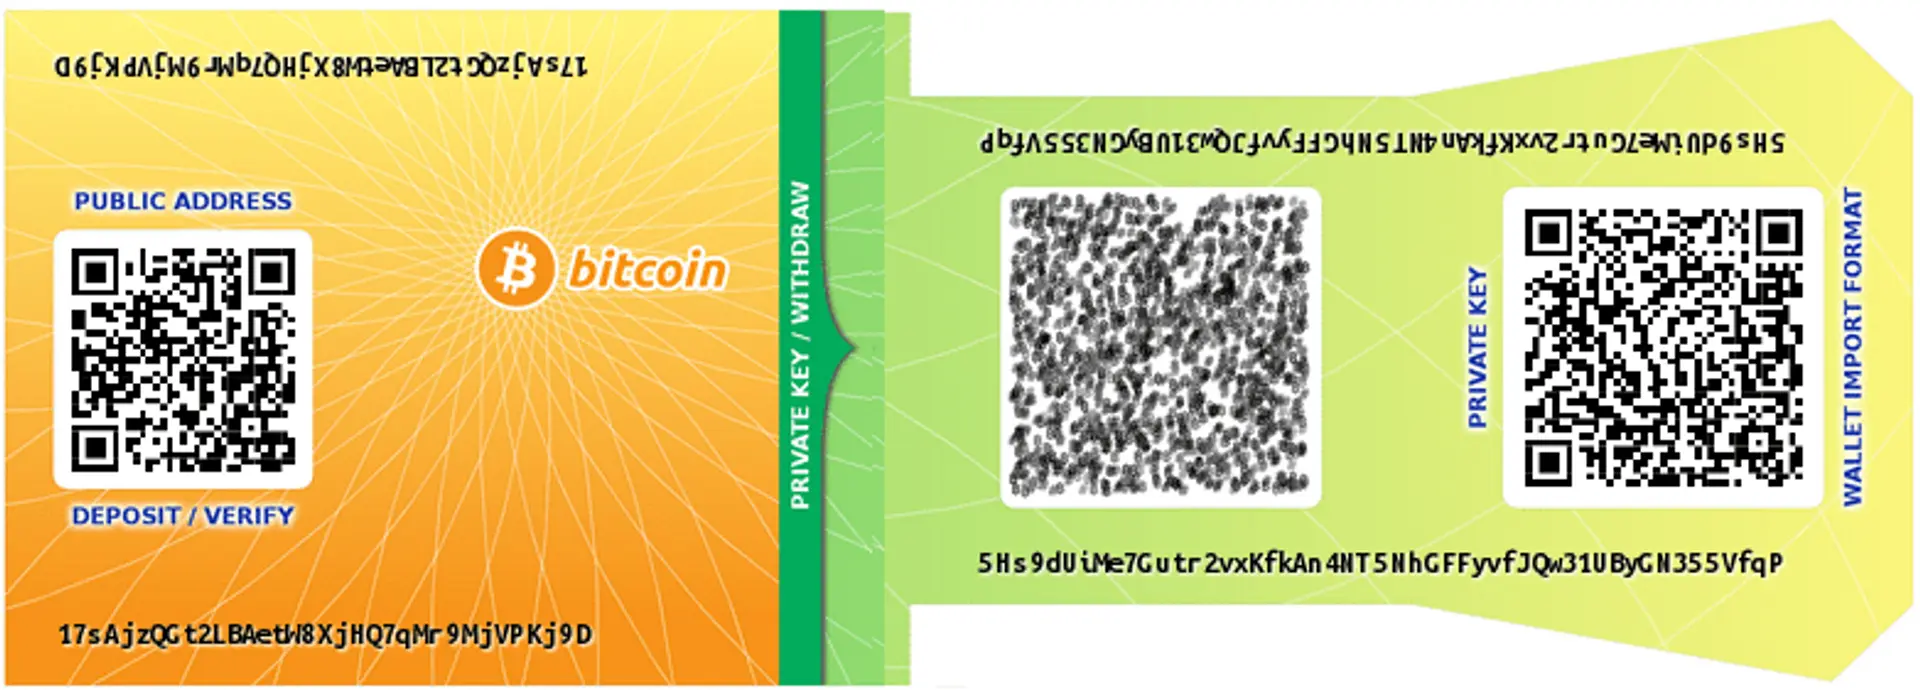 Bitcoin-paper-wallet-generated-using-https-bitcoinpaperwalletcom-The-printout-is